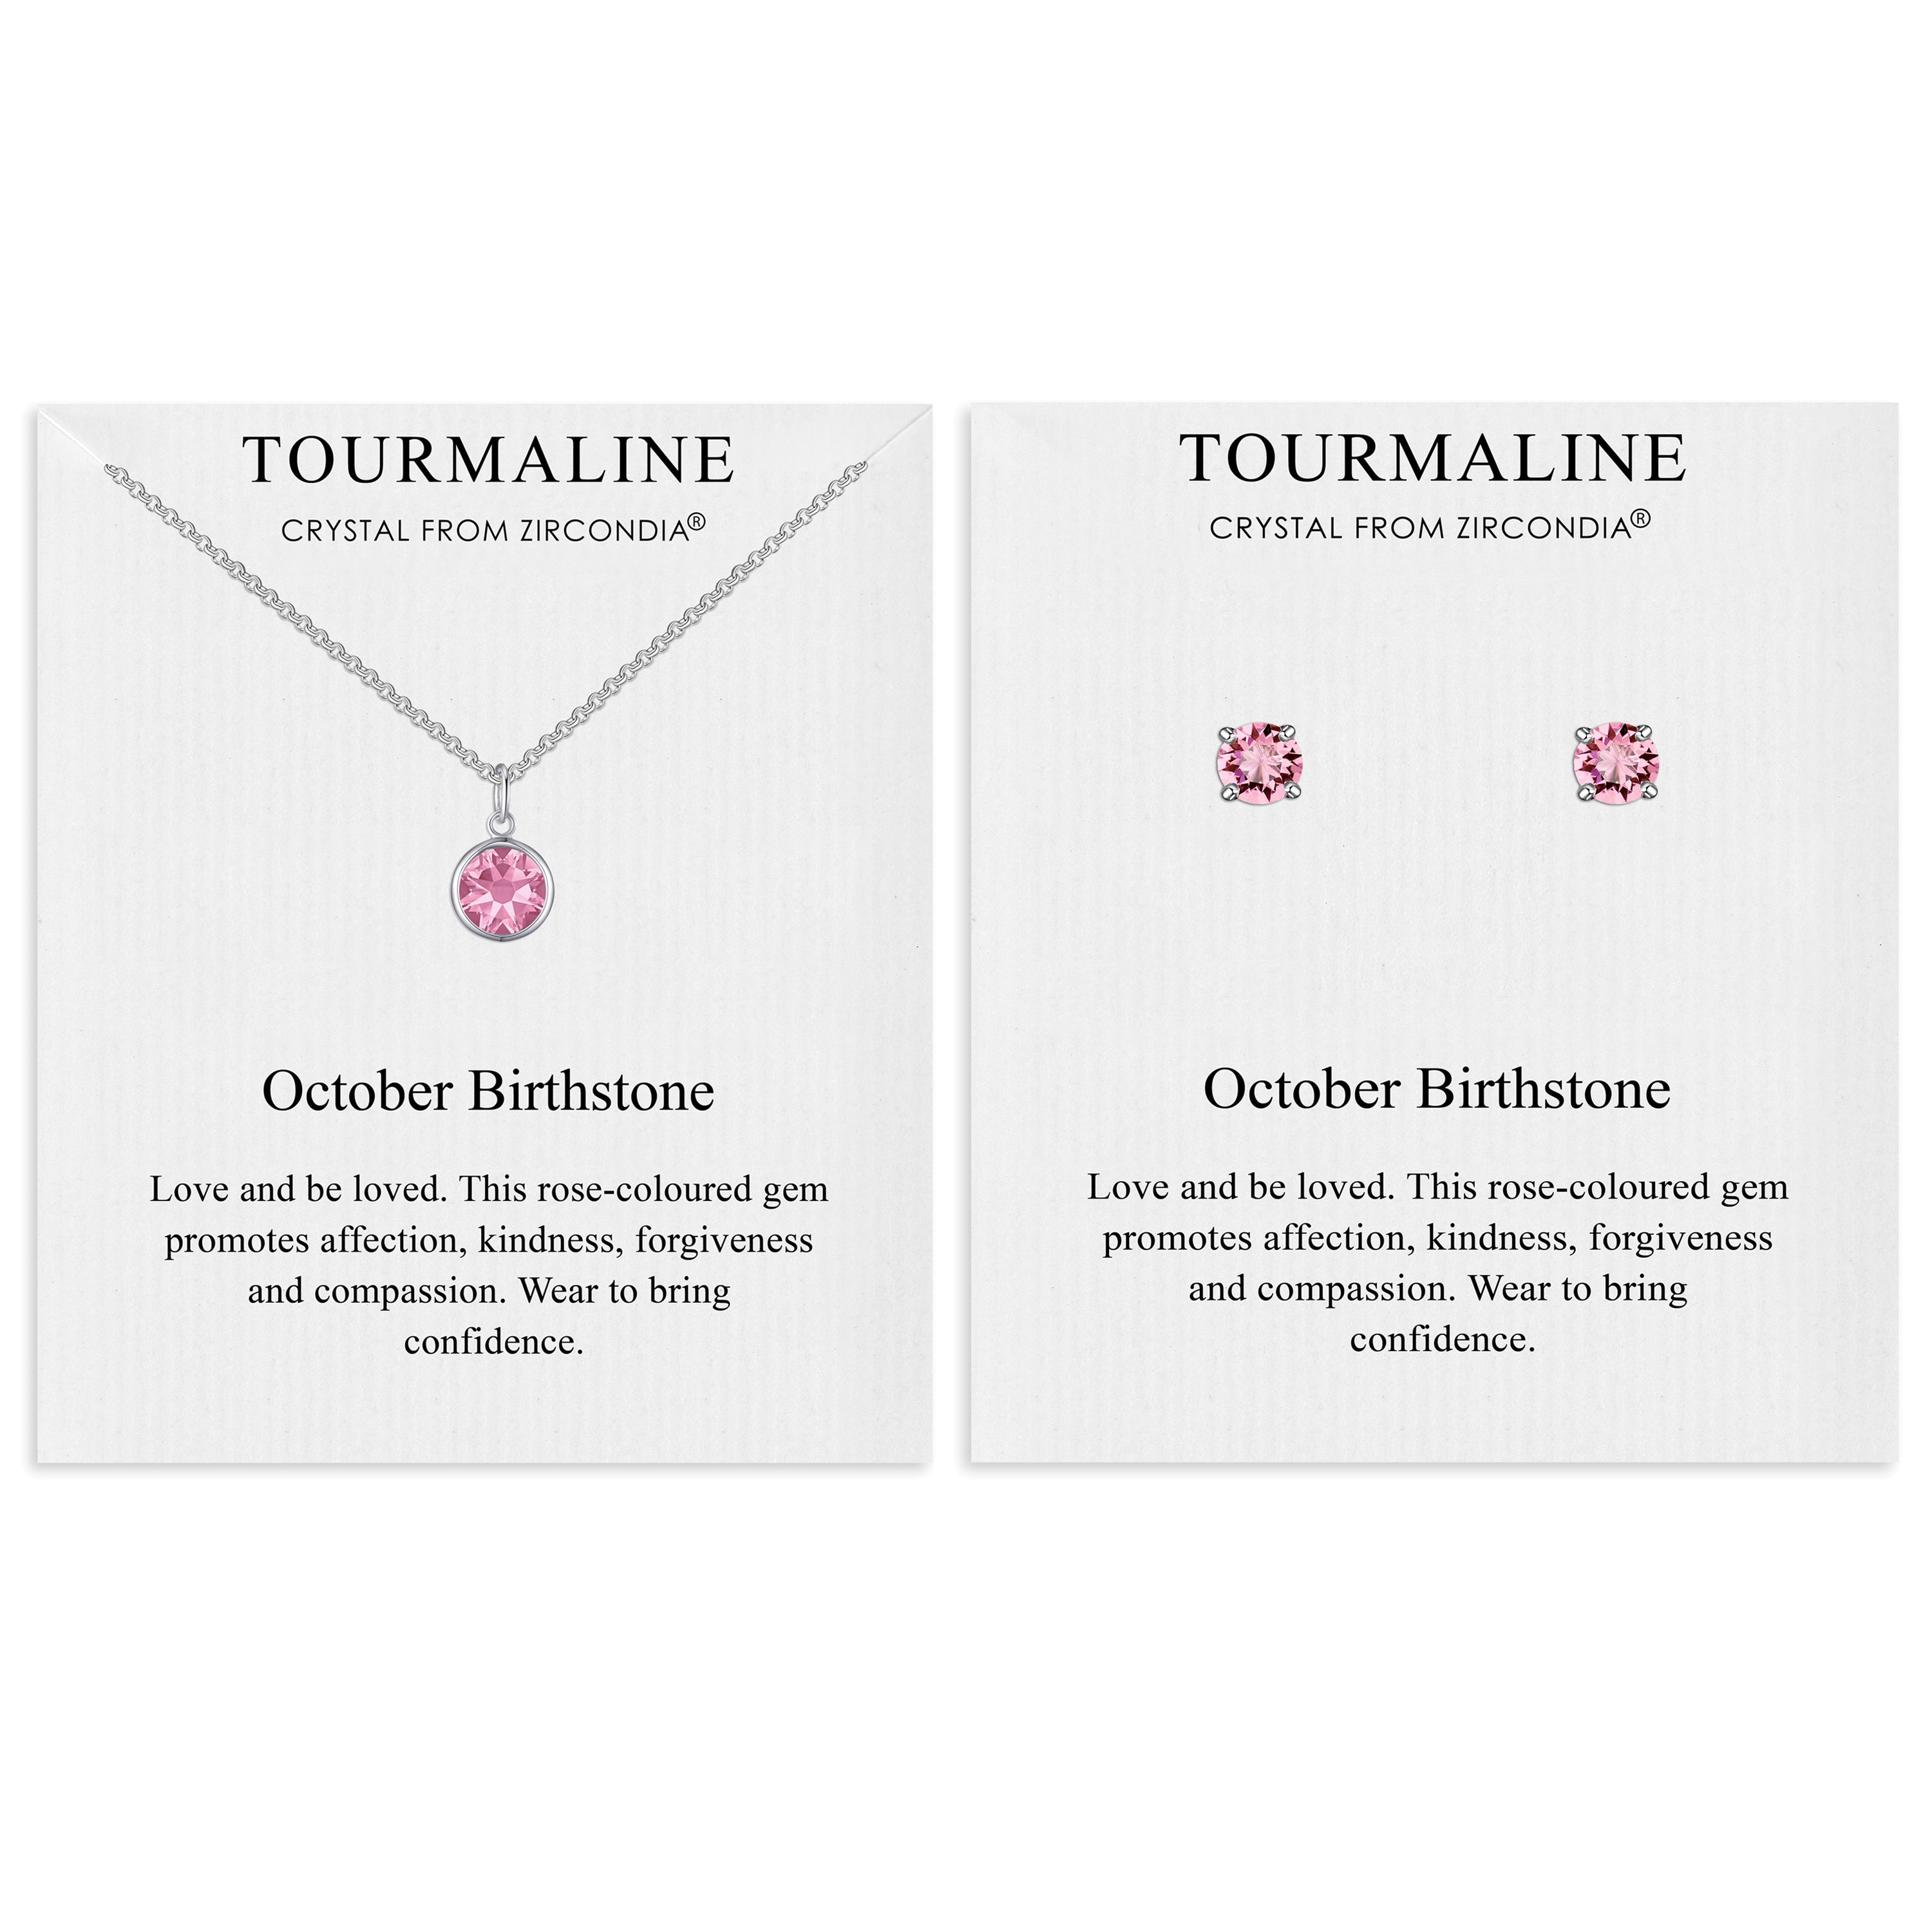 October (Tourmaline) Birthstone Necklace & Earrings Set Created with Zircondia® Crystals by Philip Jones Jewellery